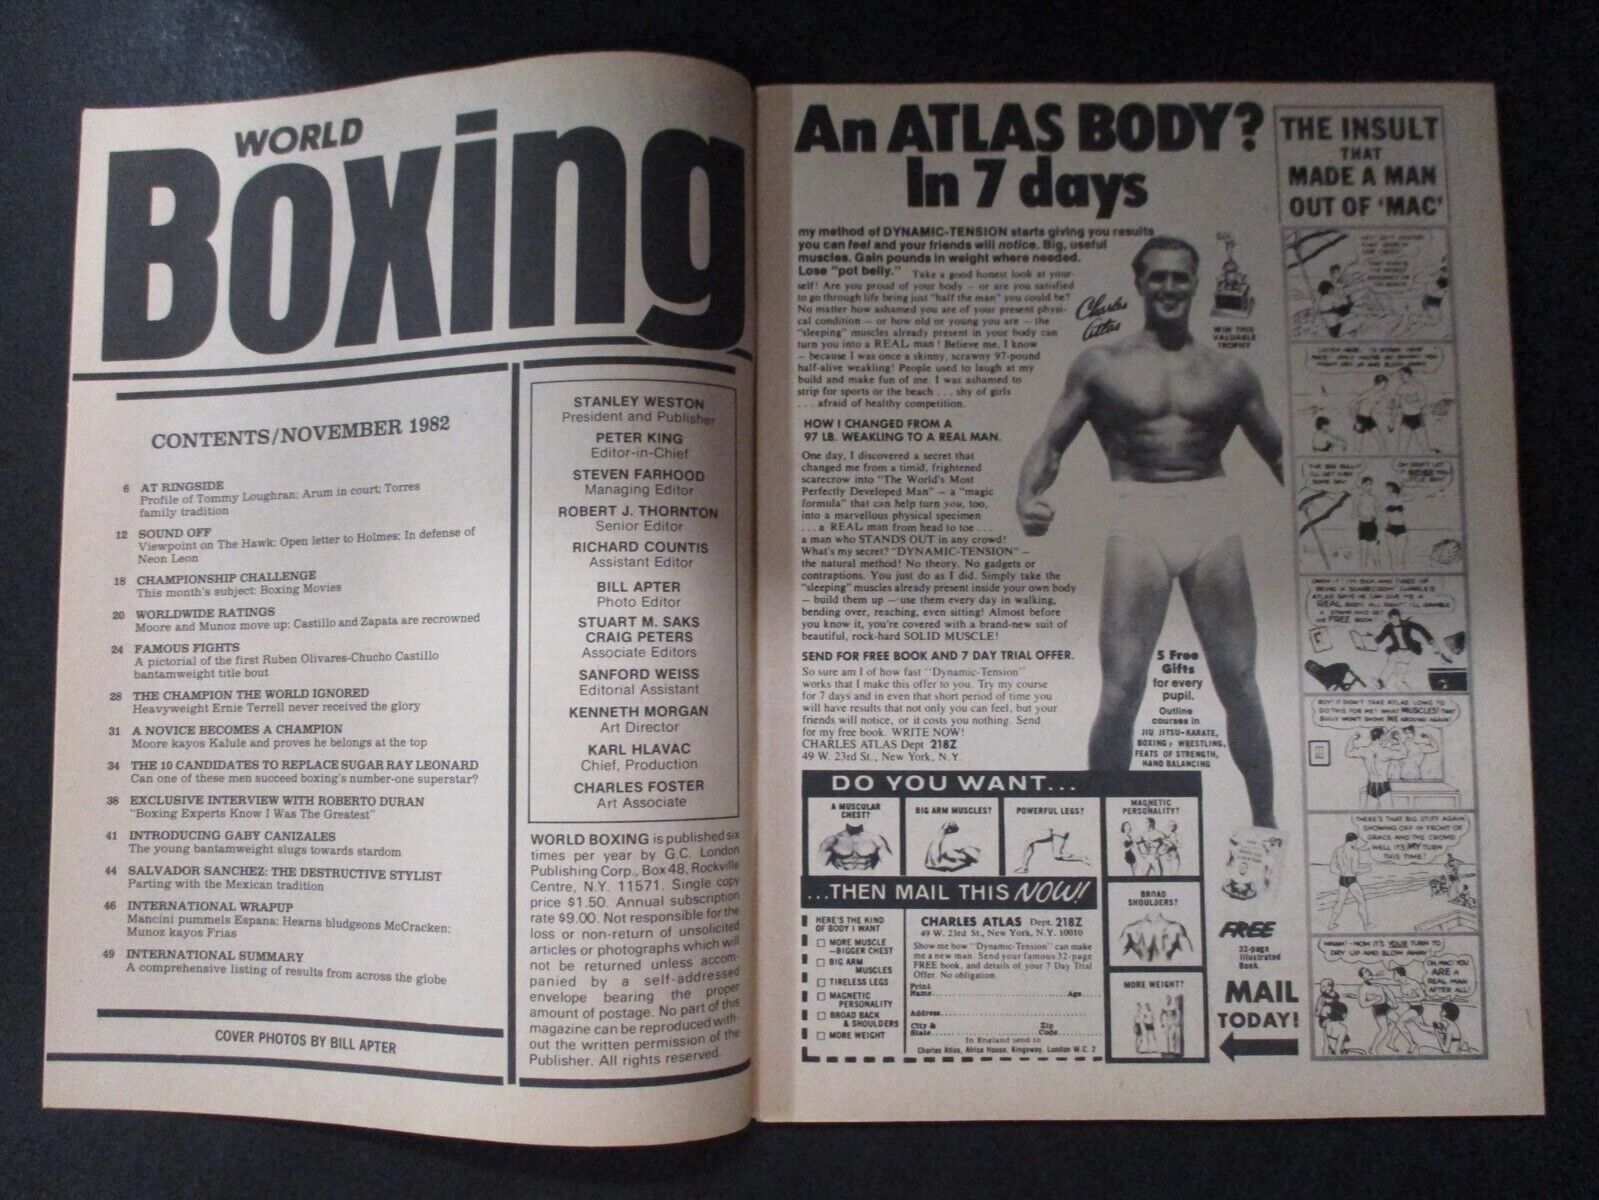 World Boxing Vintage Magazine Sugar Ray Leonard November 1982 Sanchez Vs Nelson